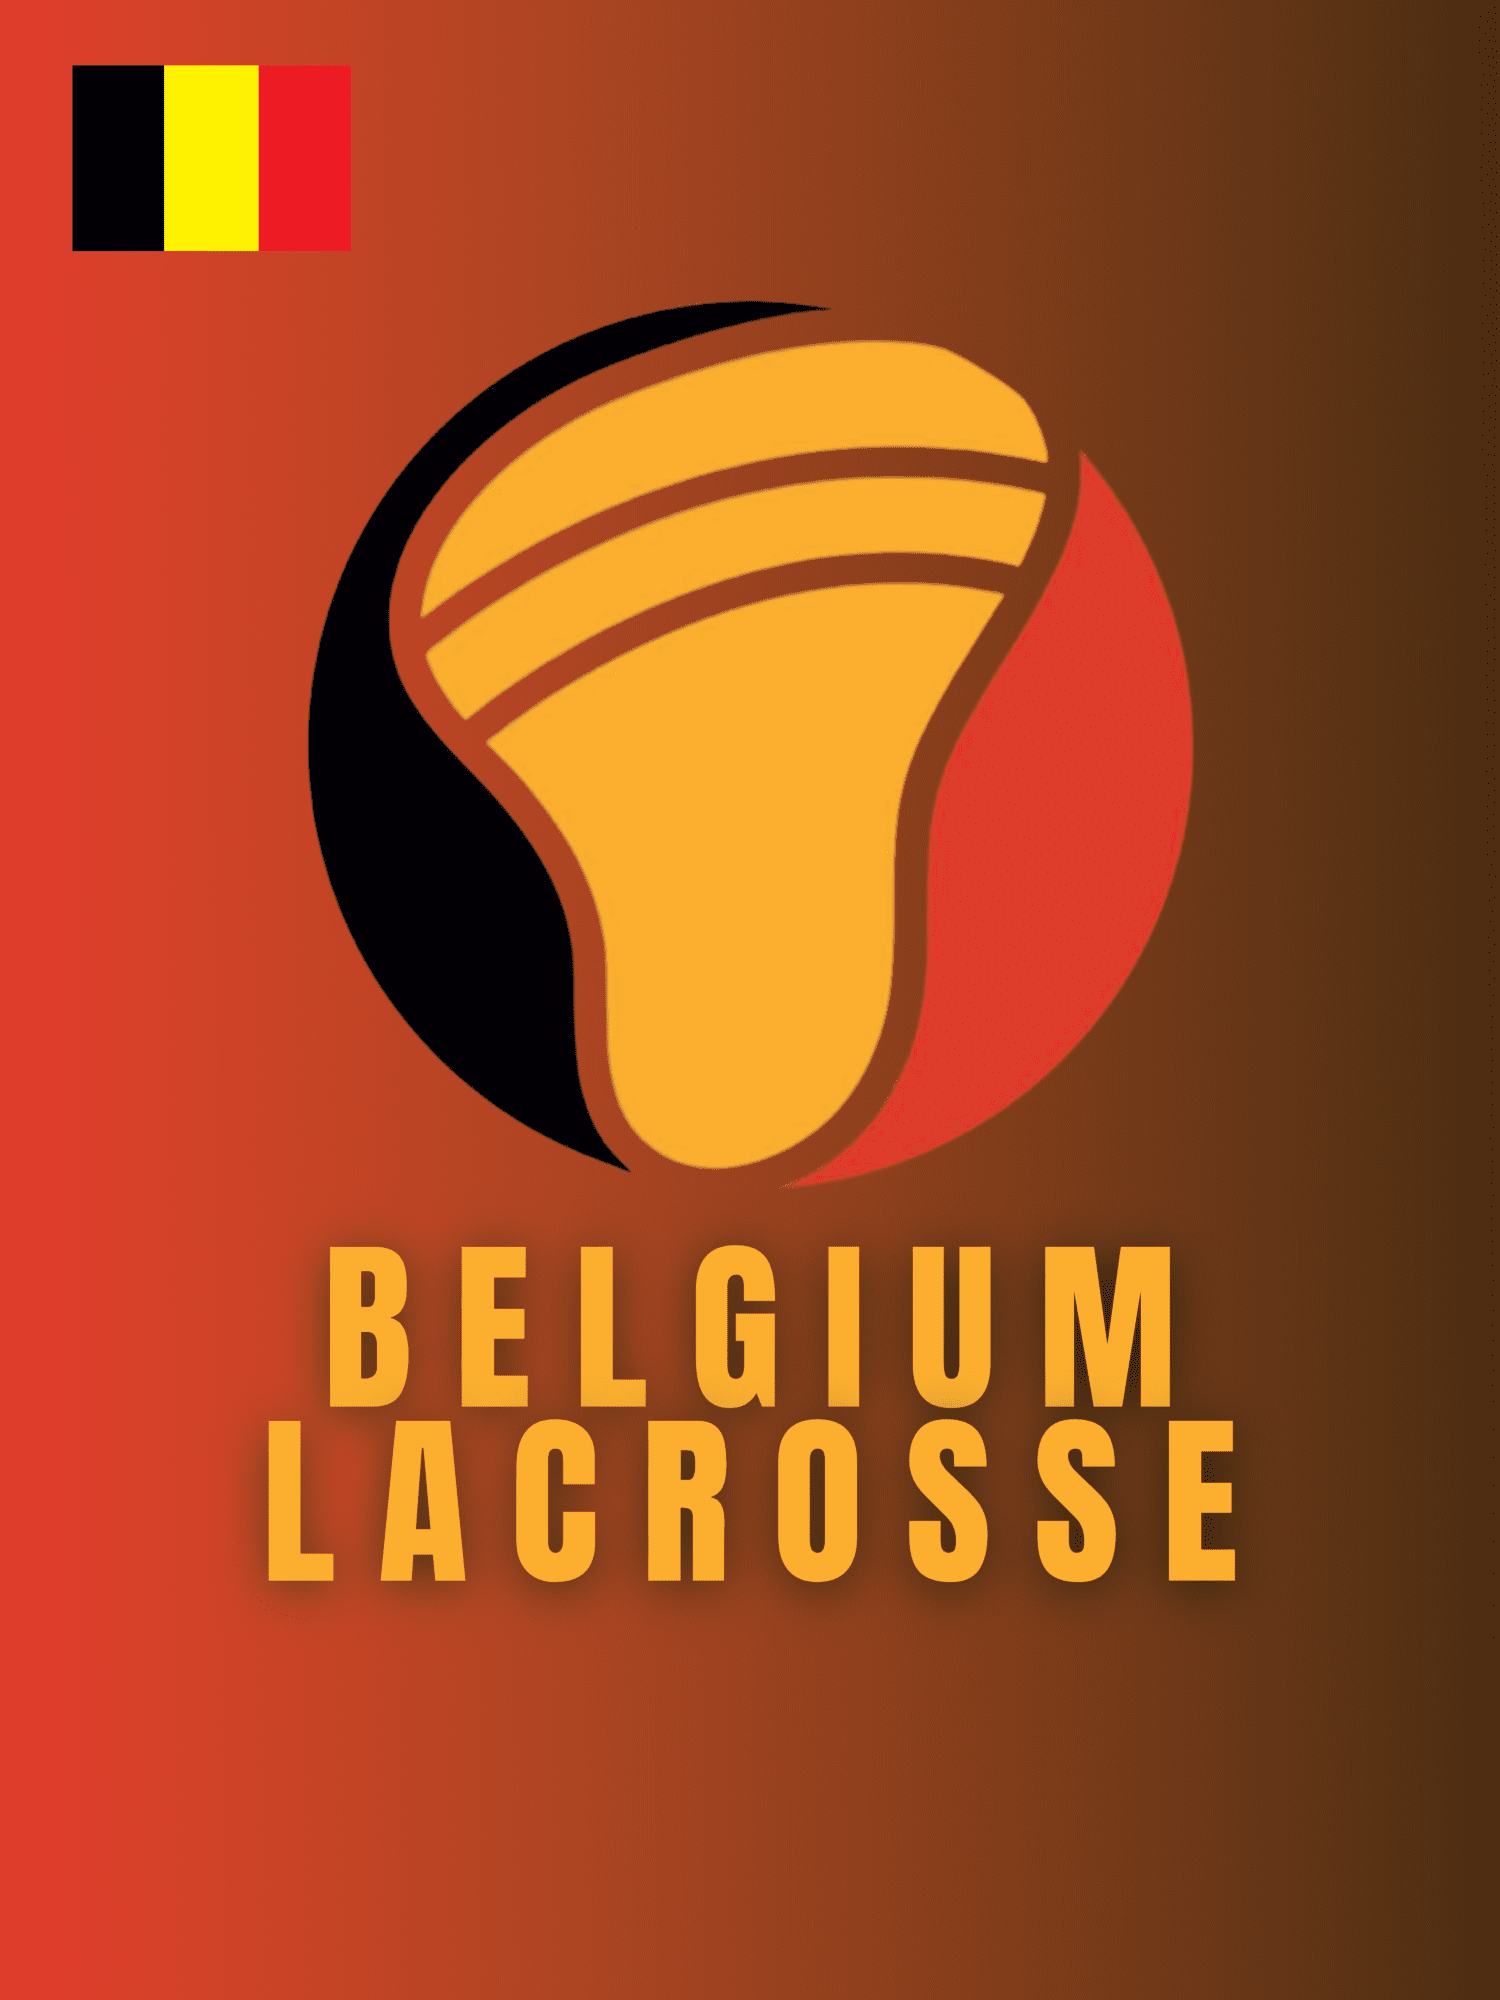 Belgium Lacrosse international spotlight